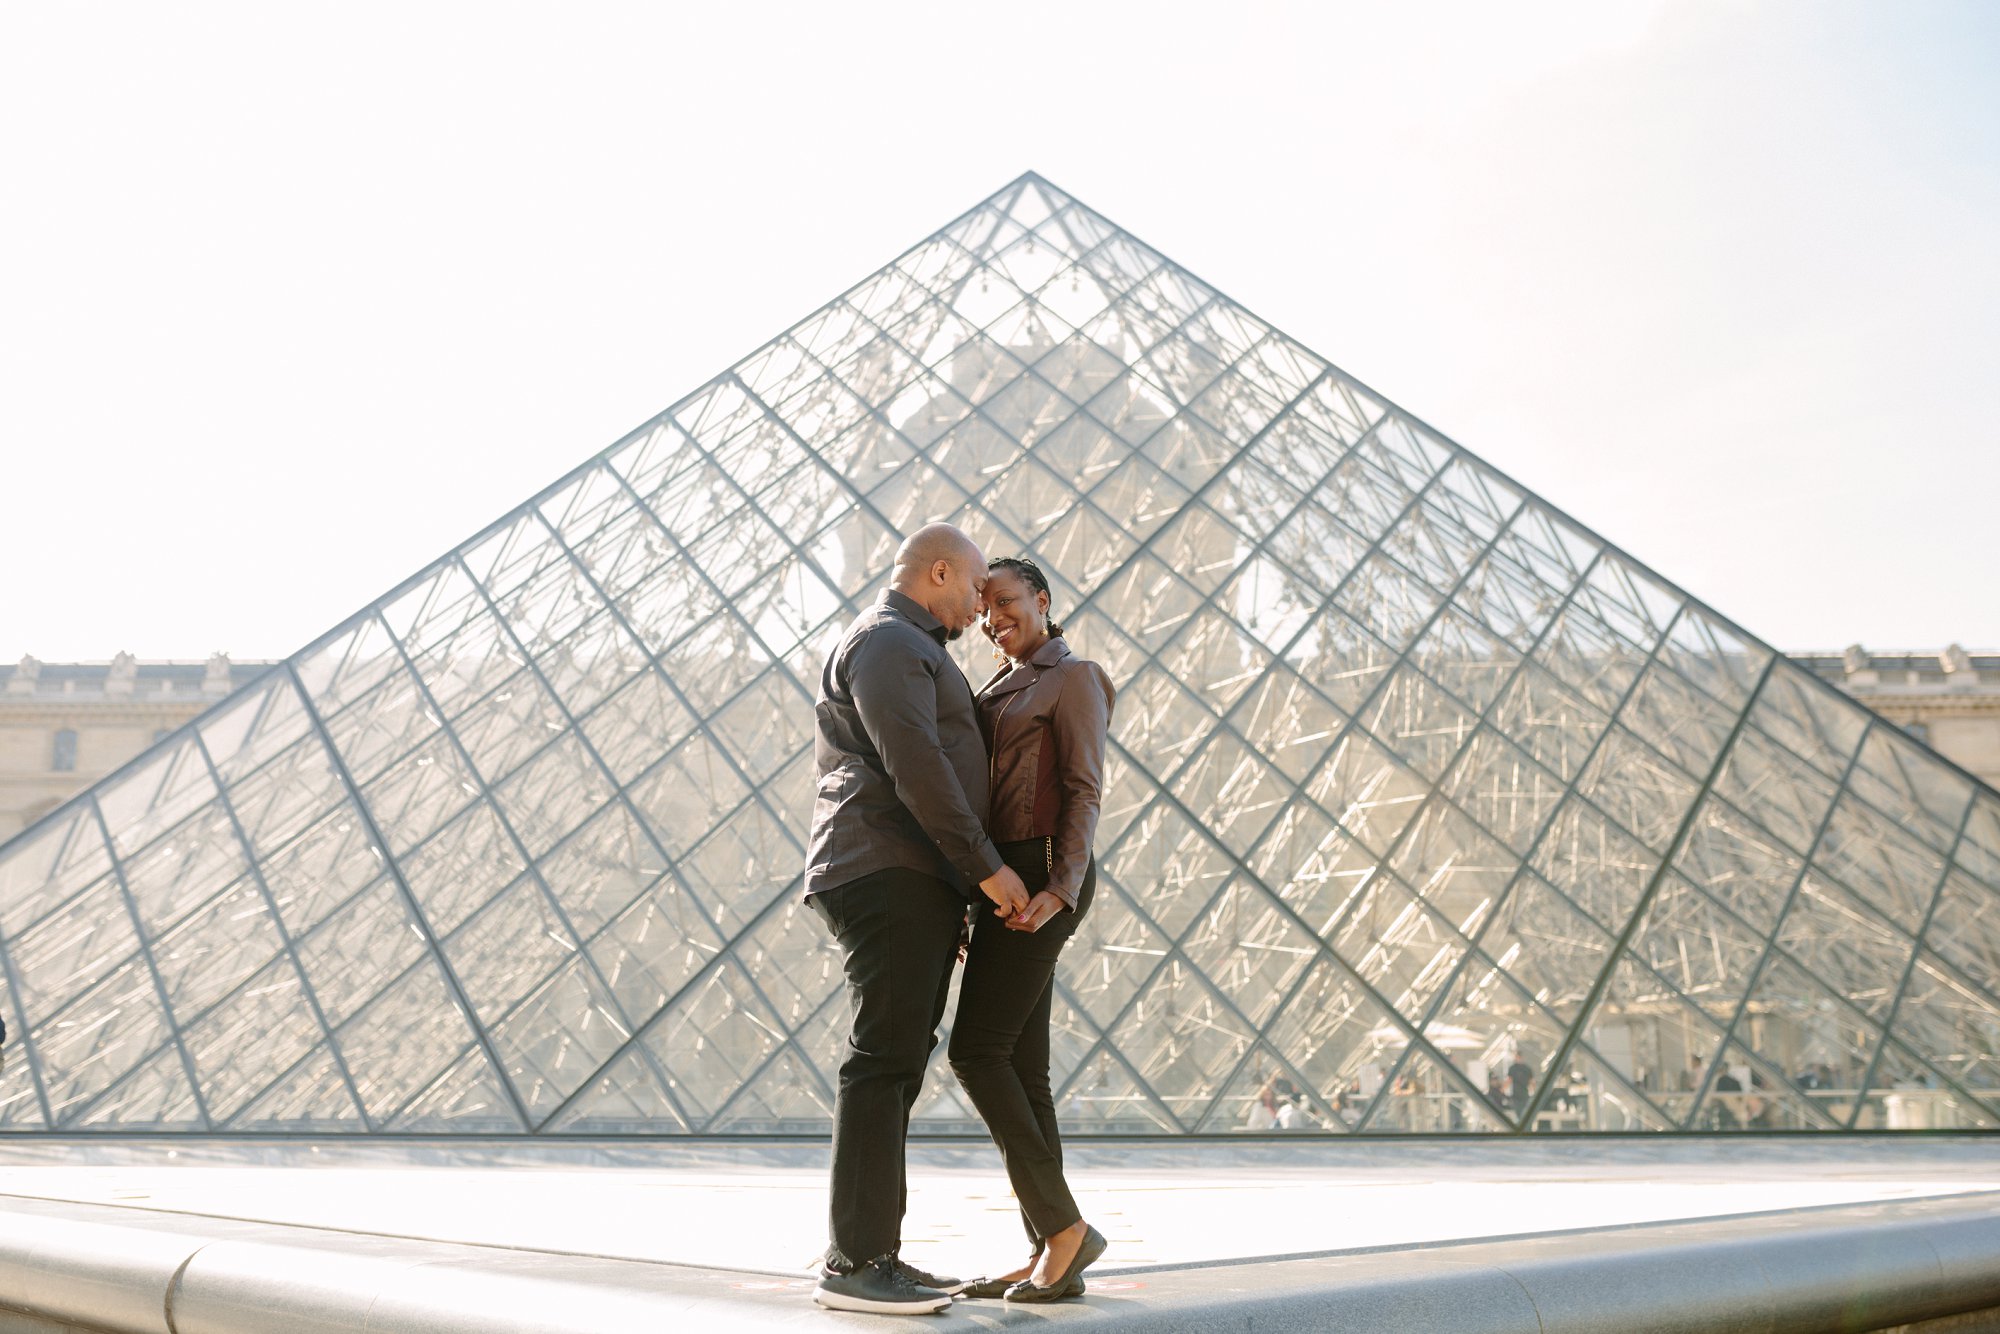 symmetrical photo shoot at the louvre museum in paris during romantic engagement photo shoot